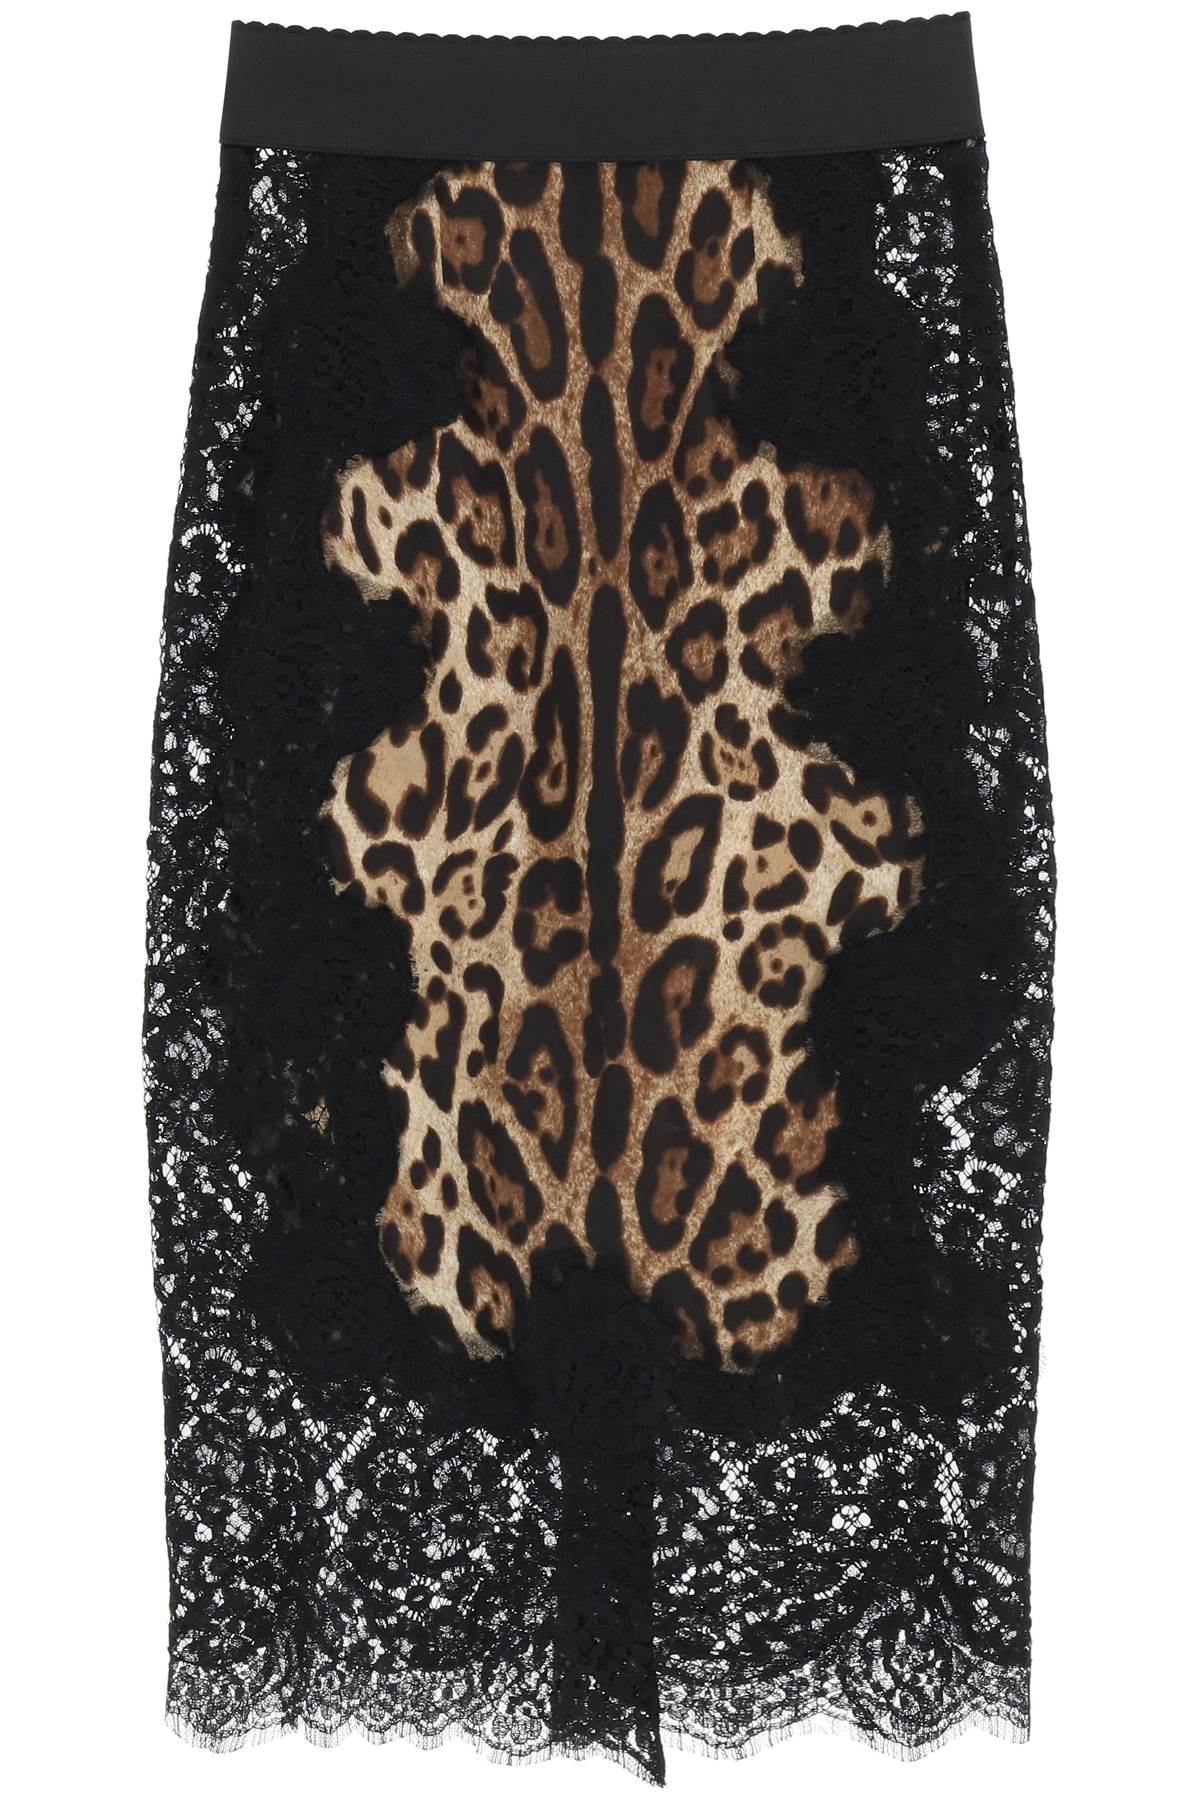 Leopard Print Laced Pencil Skirt